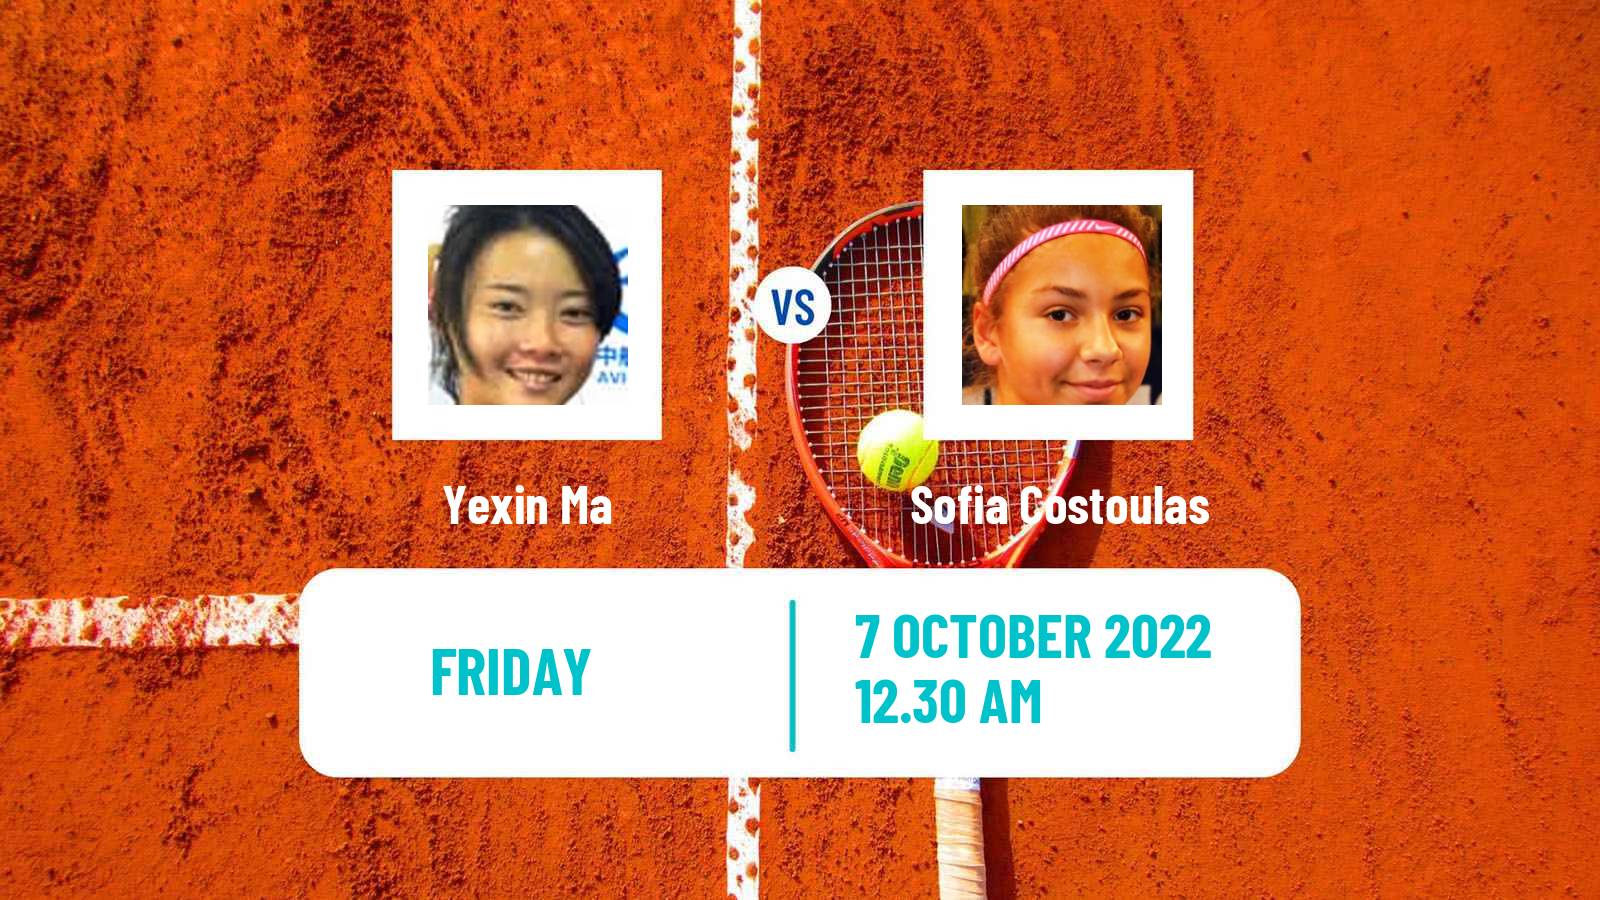 Tennis ITF Tournaments Yexin Ma - Sofia Costoulas